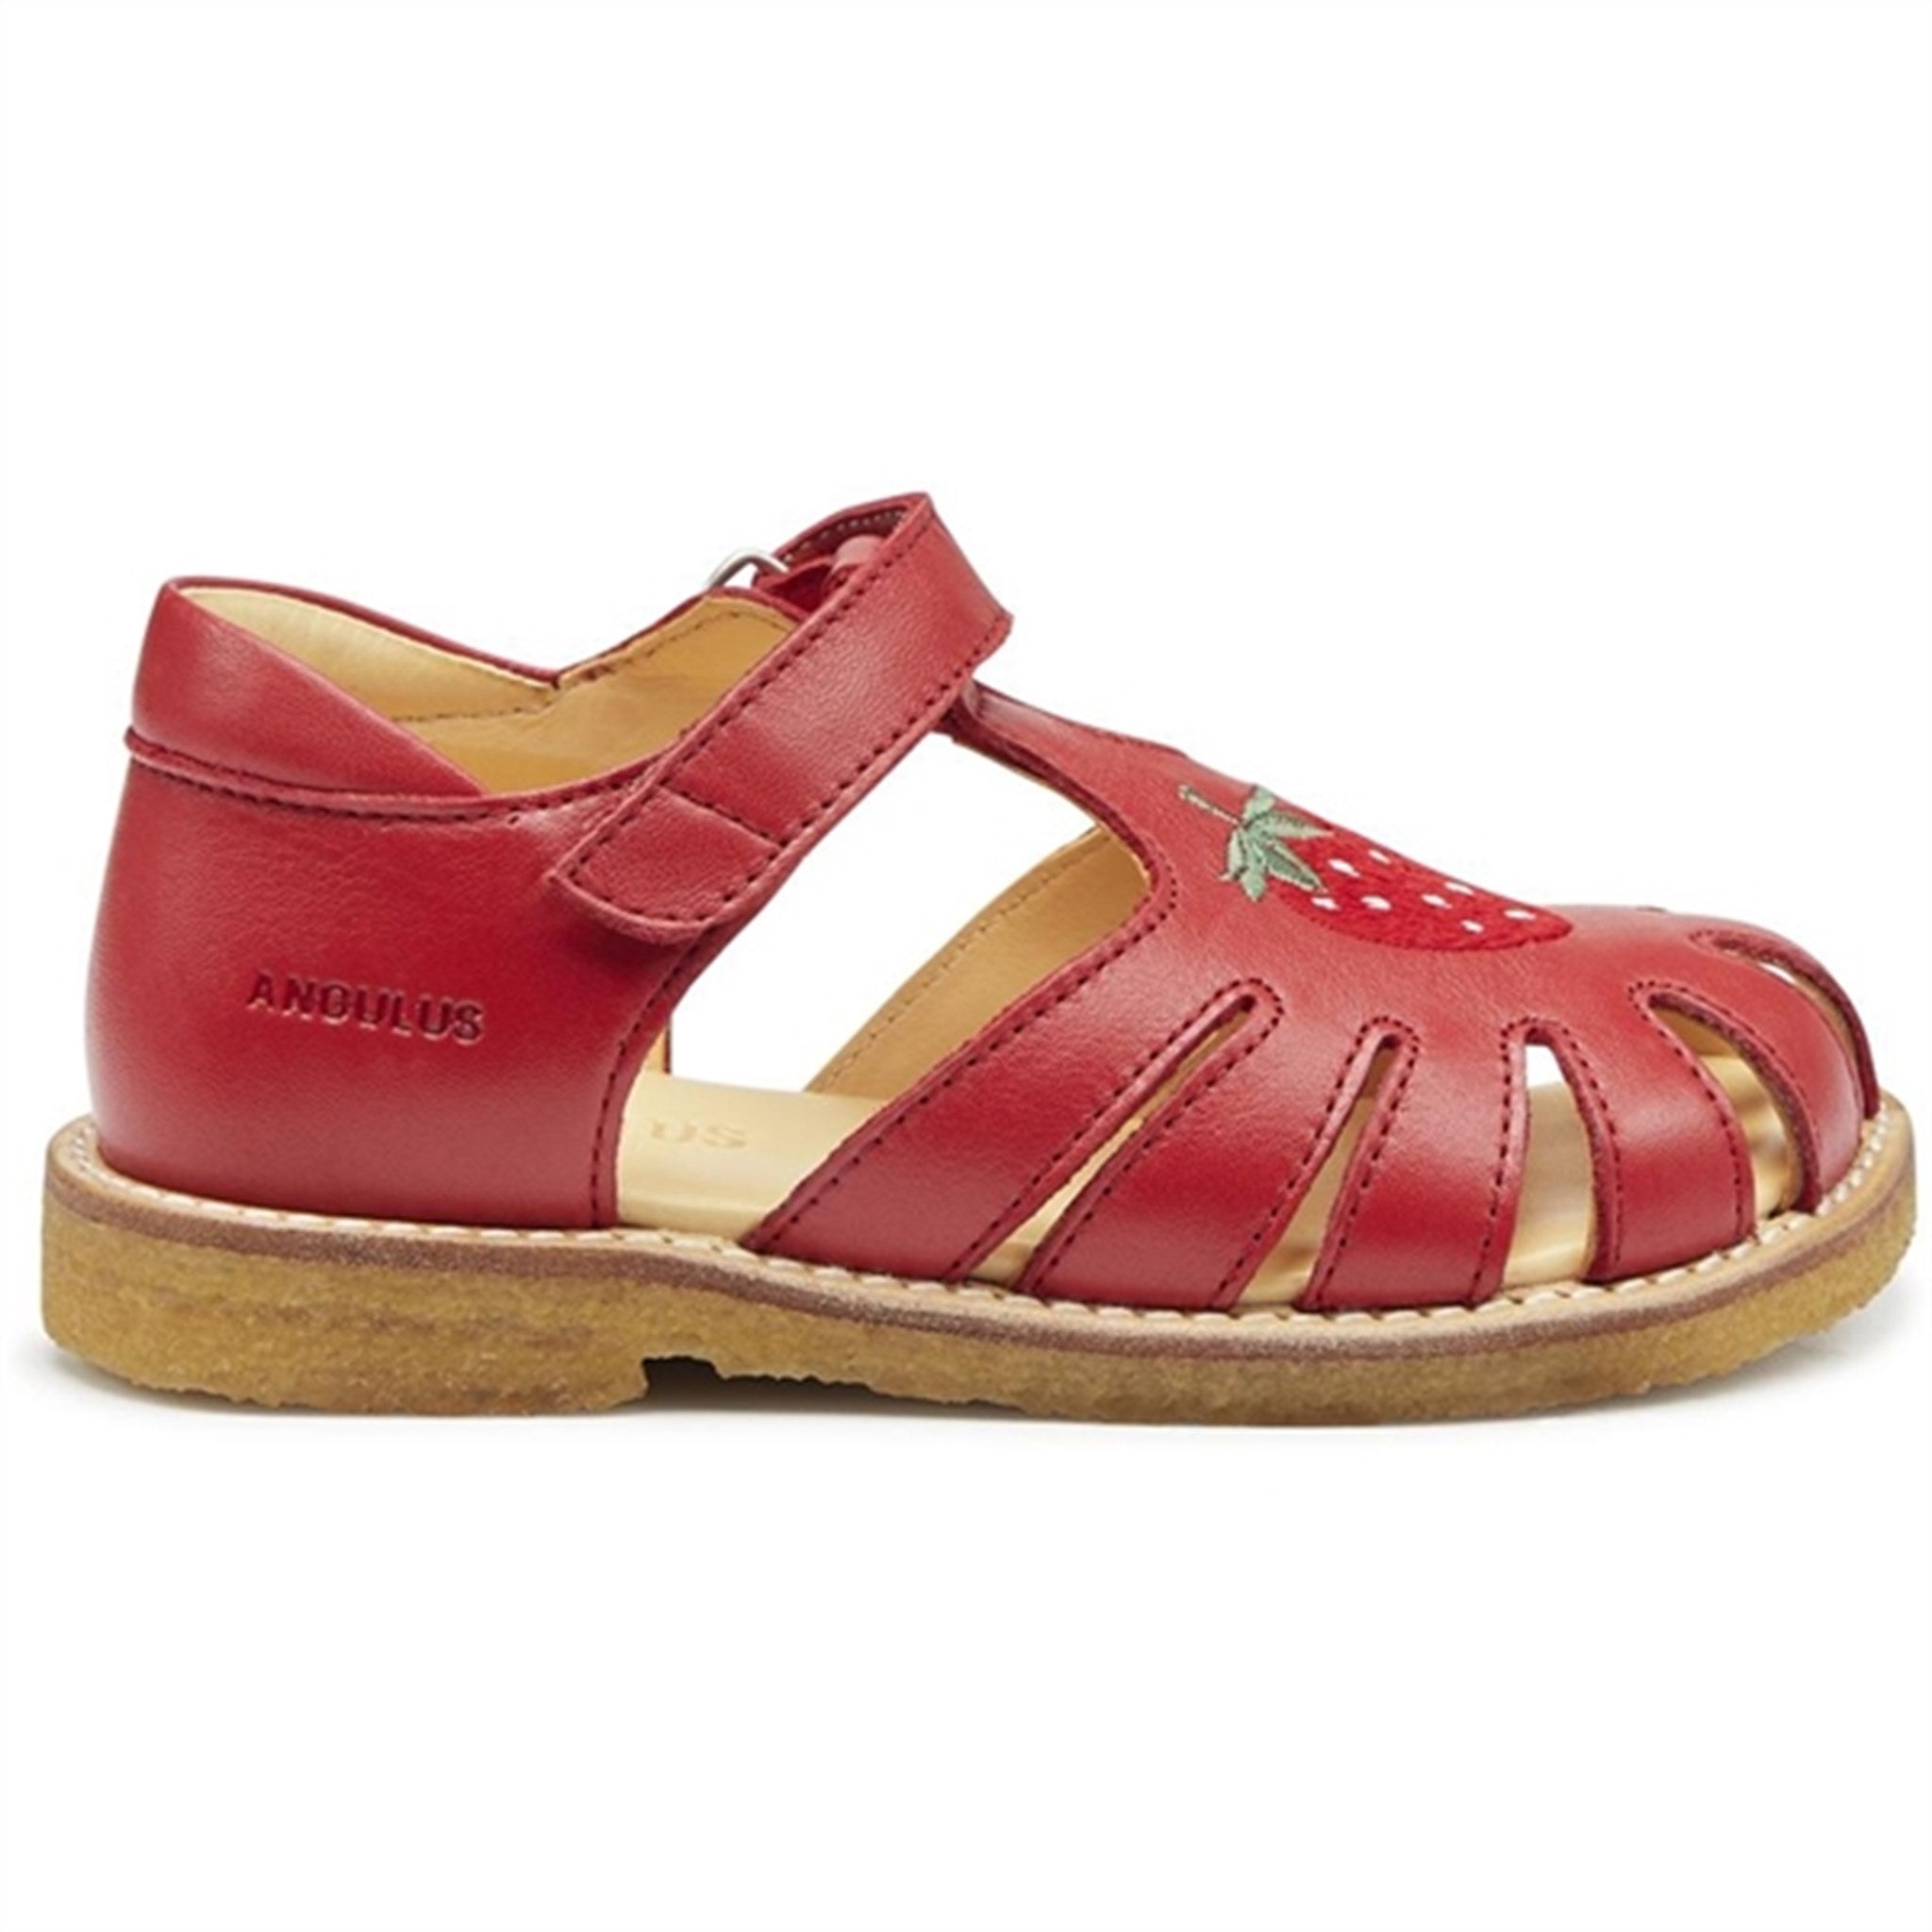 Angulus Sandals Red 2